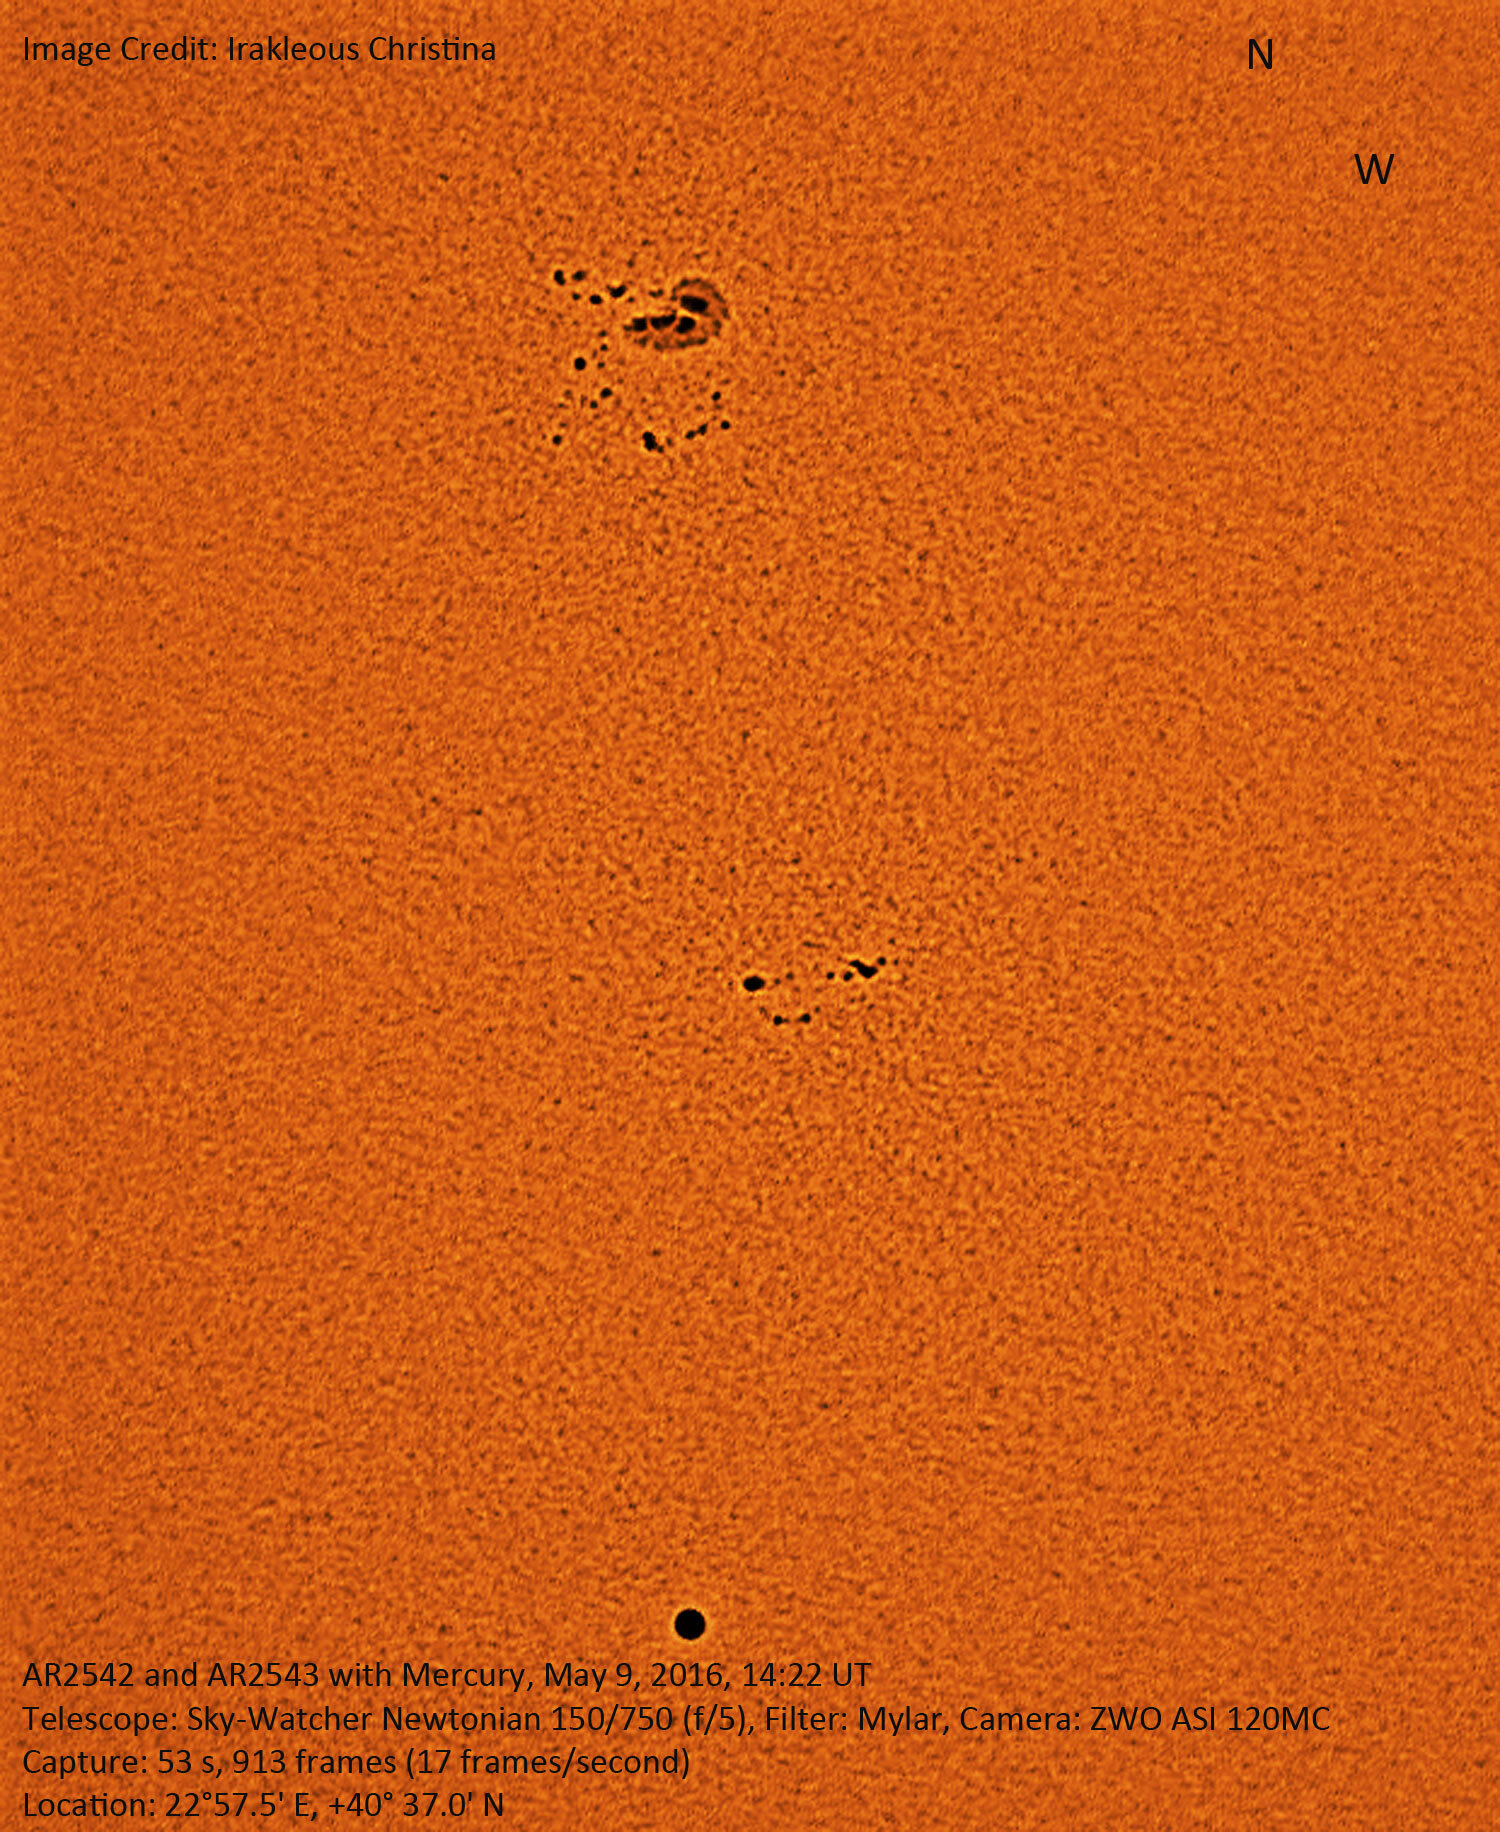 Mercury With Sunspots